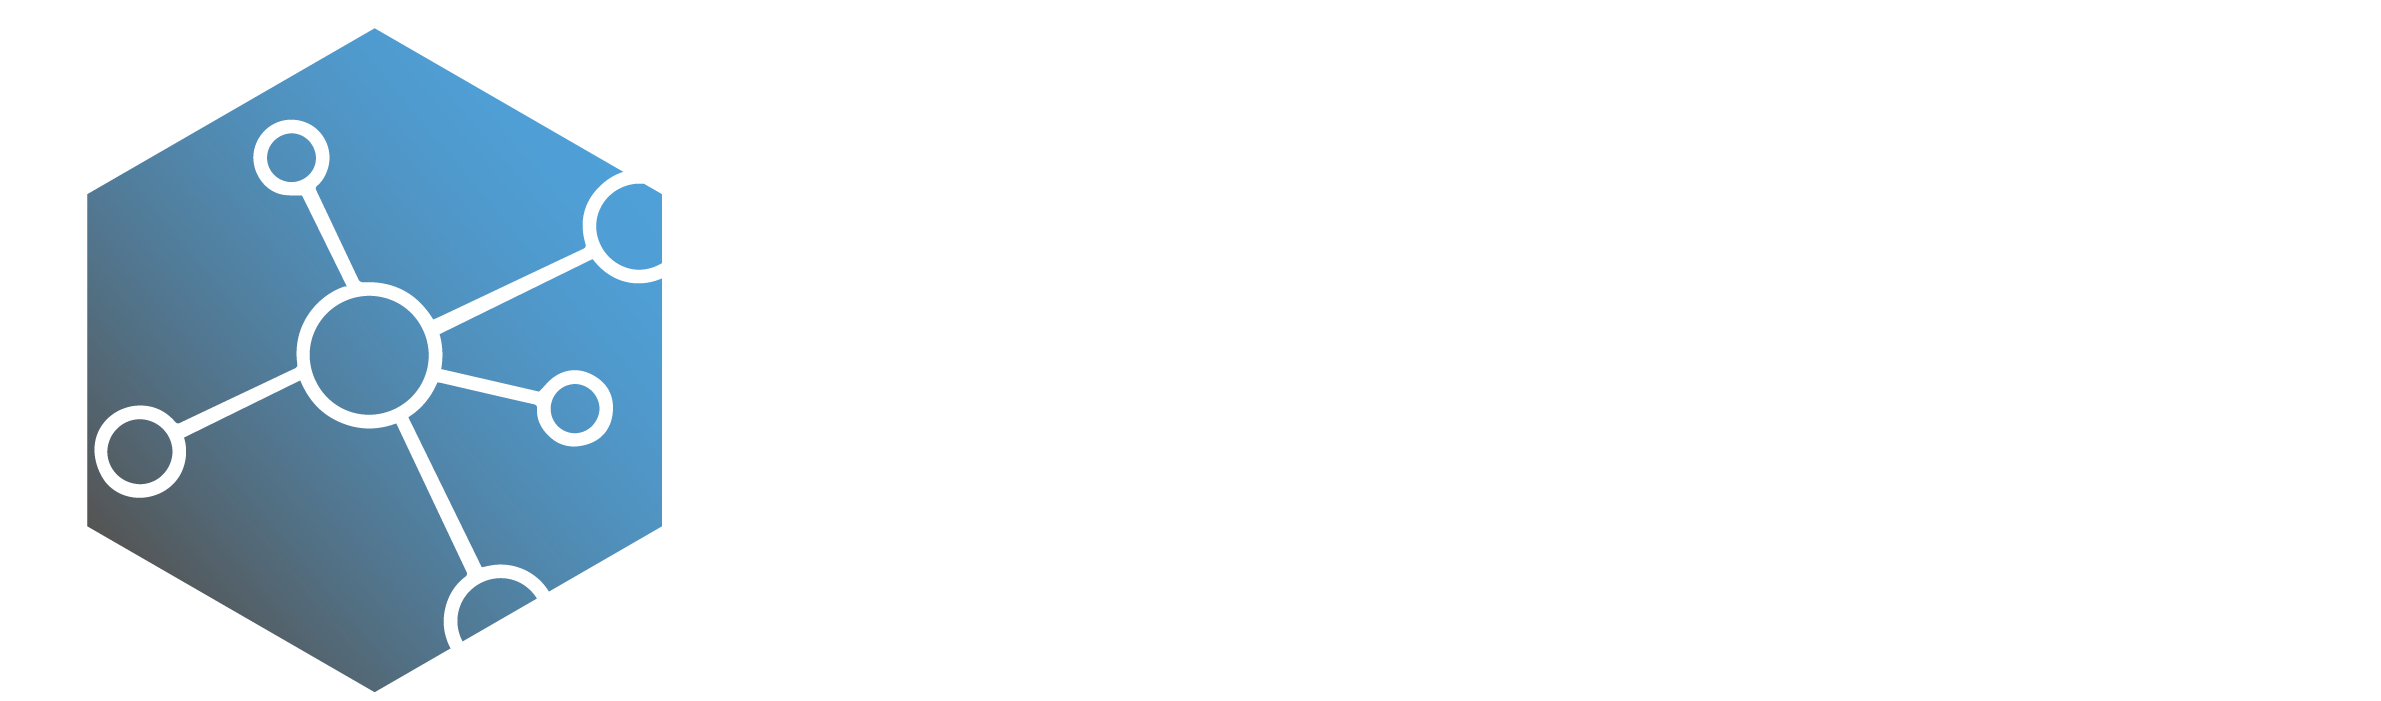 SGC Tecnologie